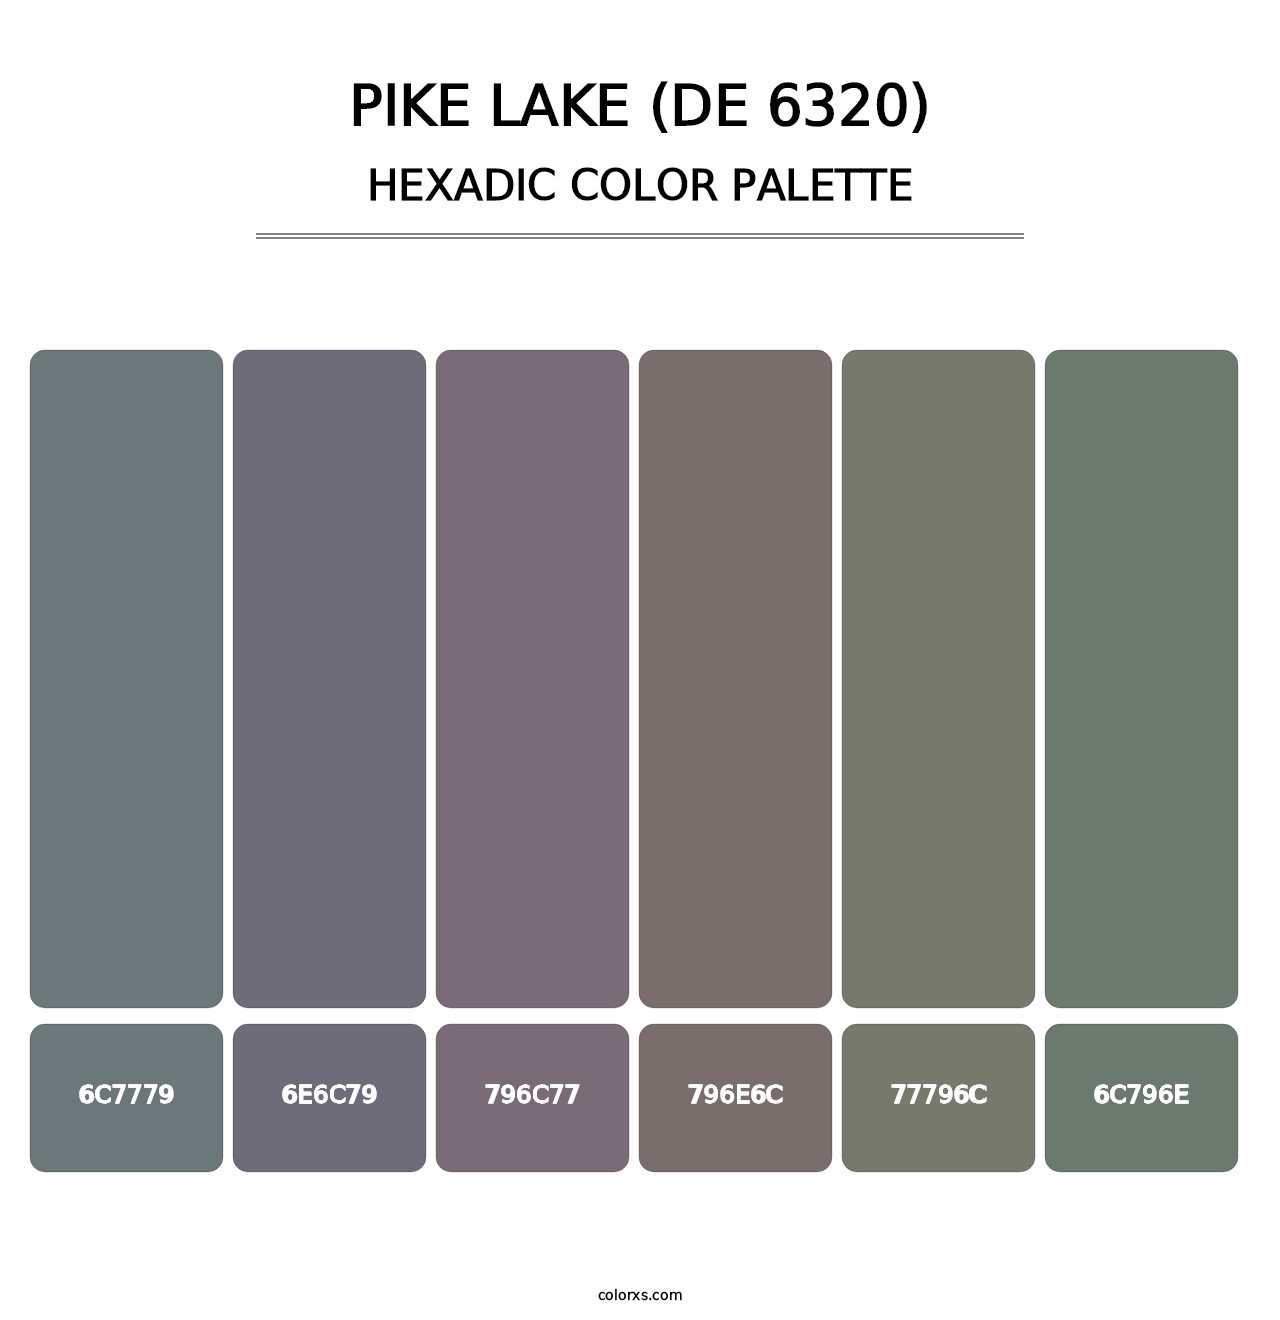 Pike Lake (DE 6320) - Hexadic Color Palette